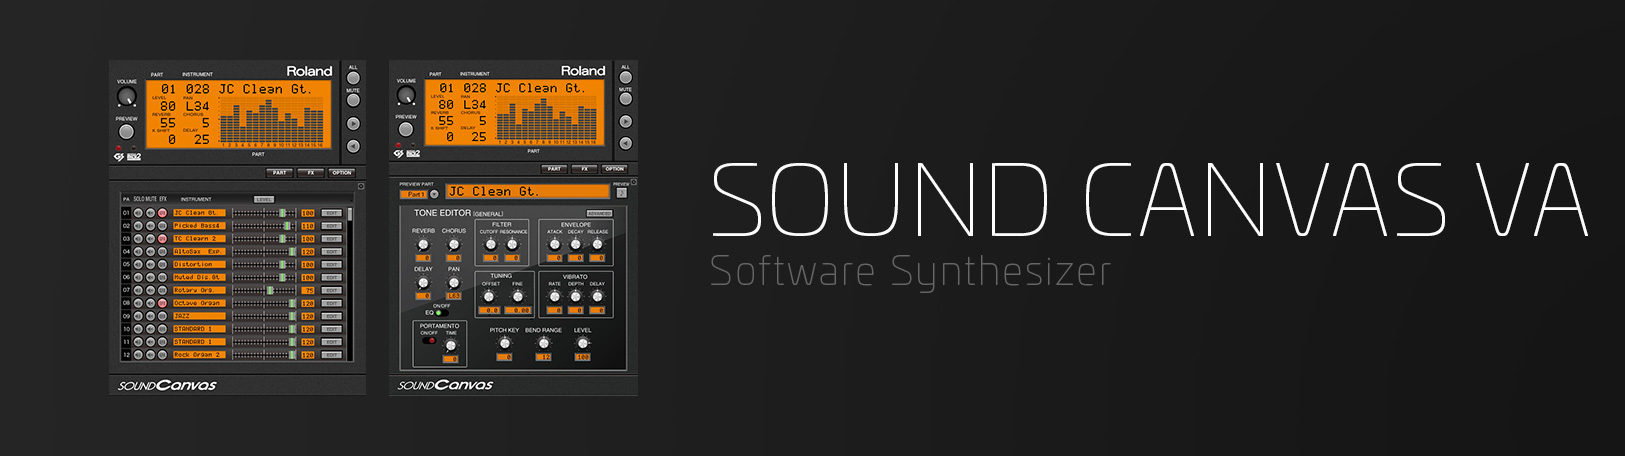 roland sound canvas va v1.0.3 incl keygen